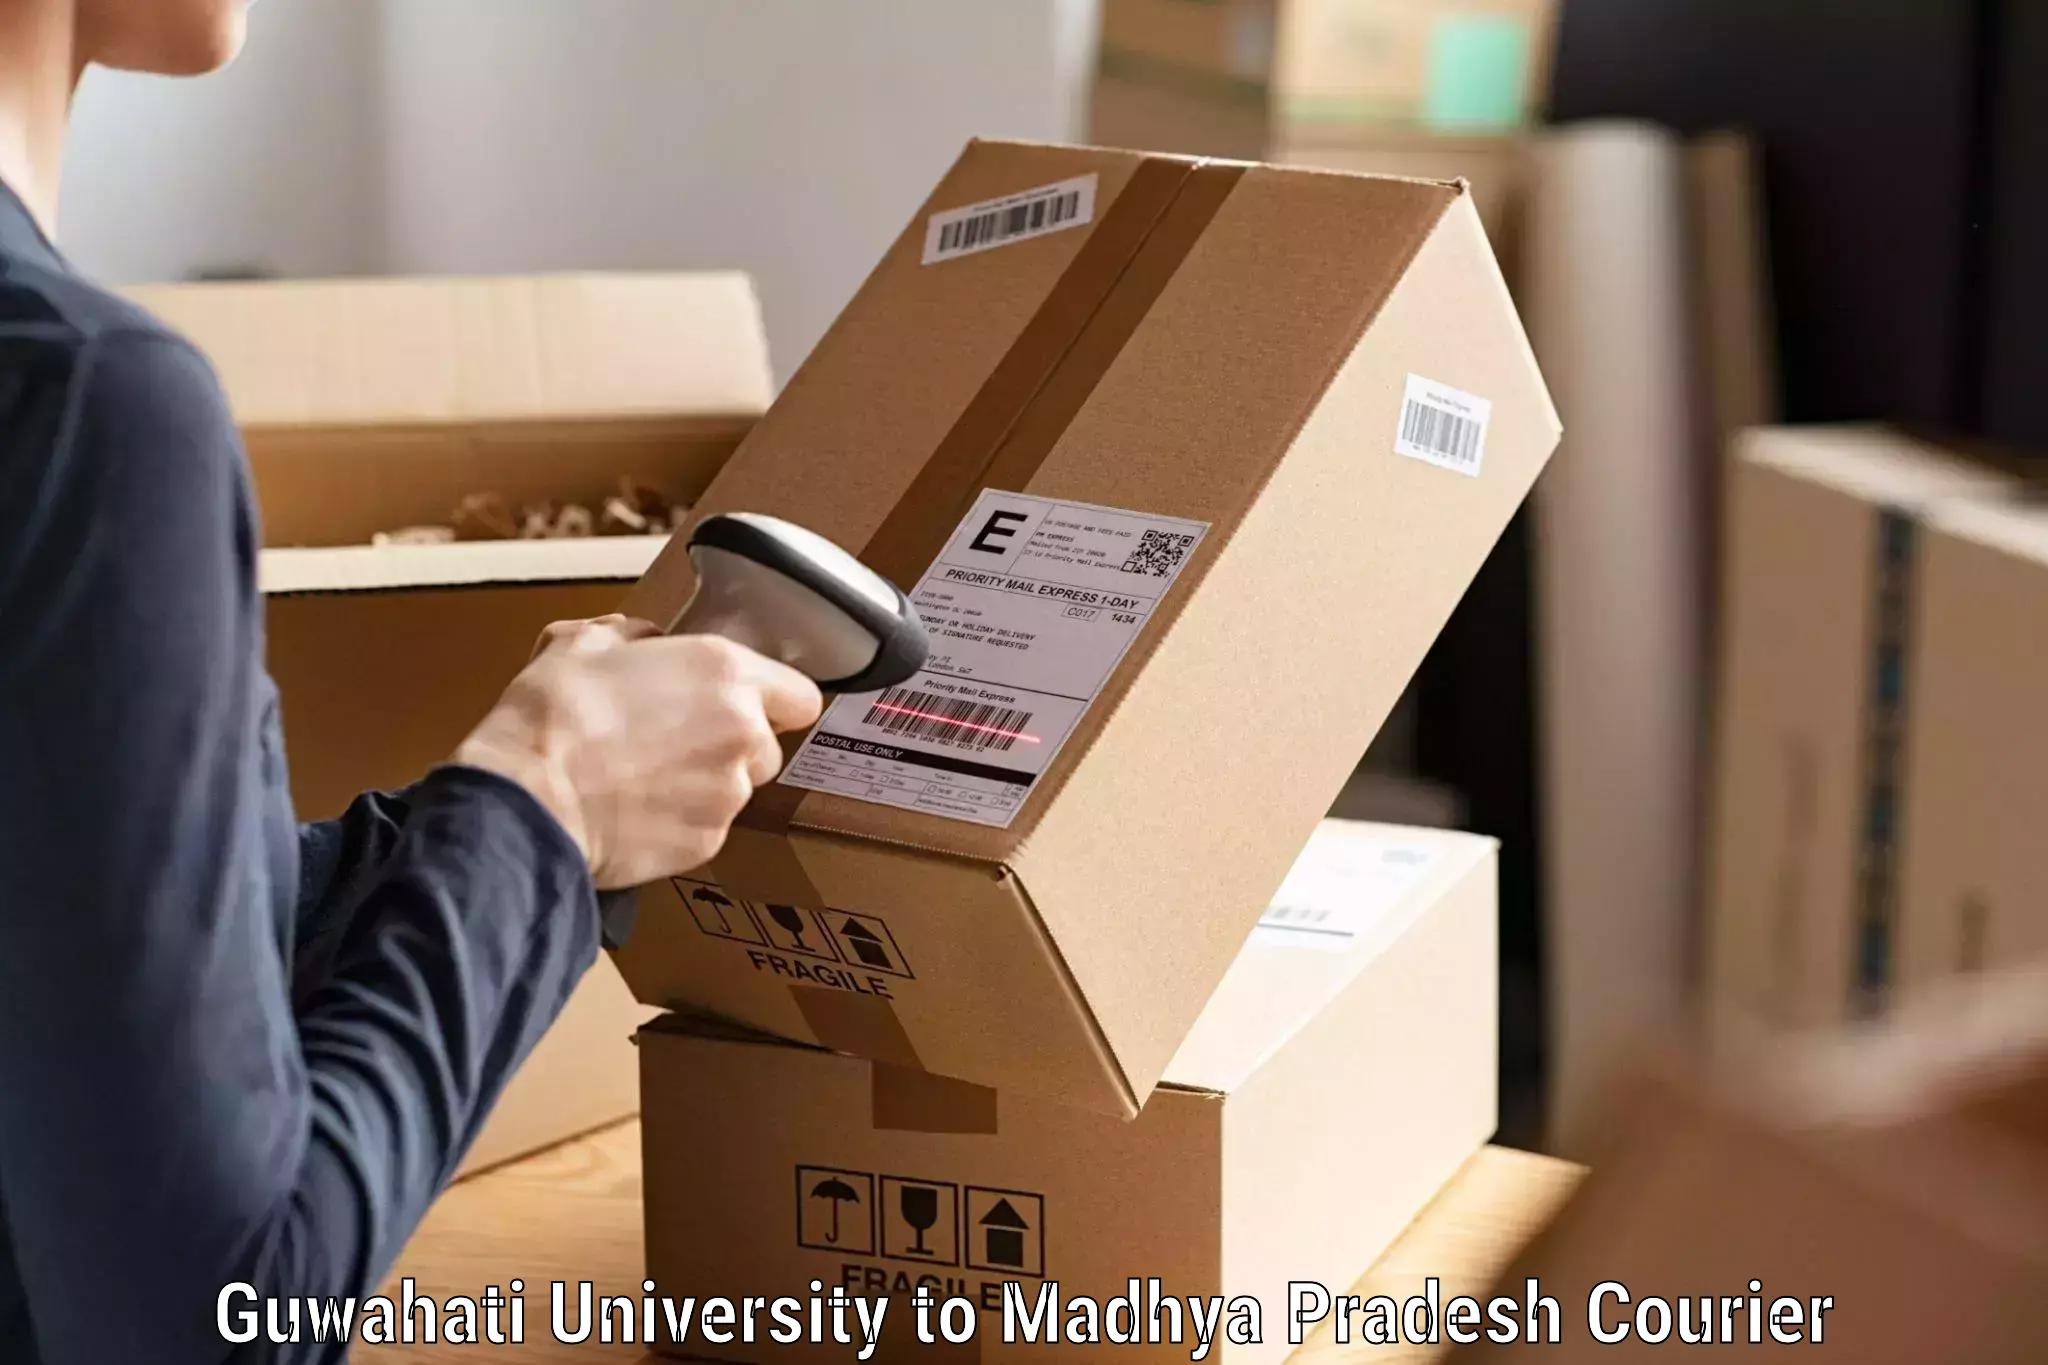 Custom courier packaging in Guwahati University to Beohari